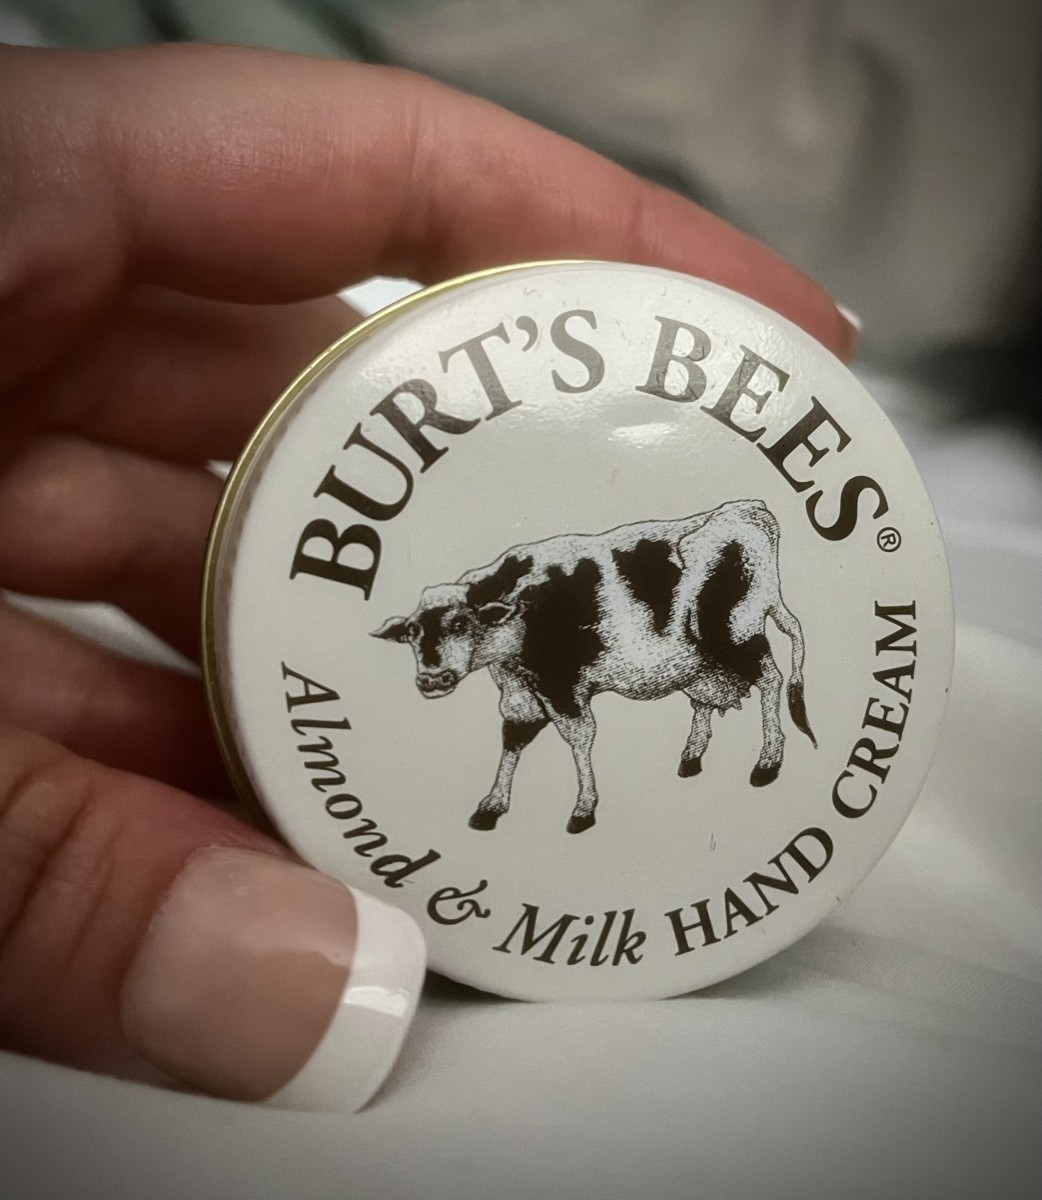 Burt's Bees Almond and Milk Hand Cream Review